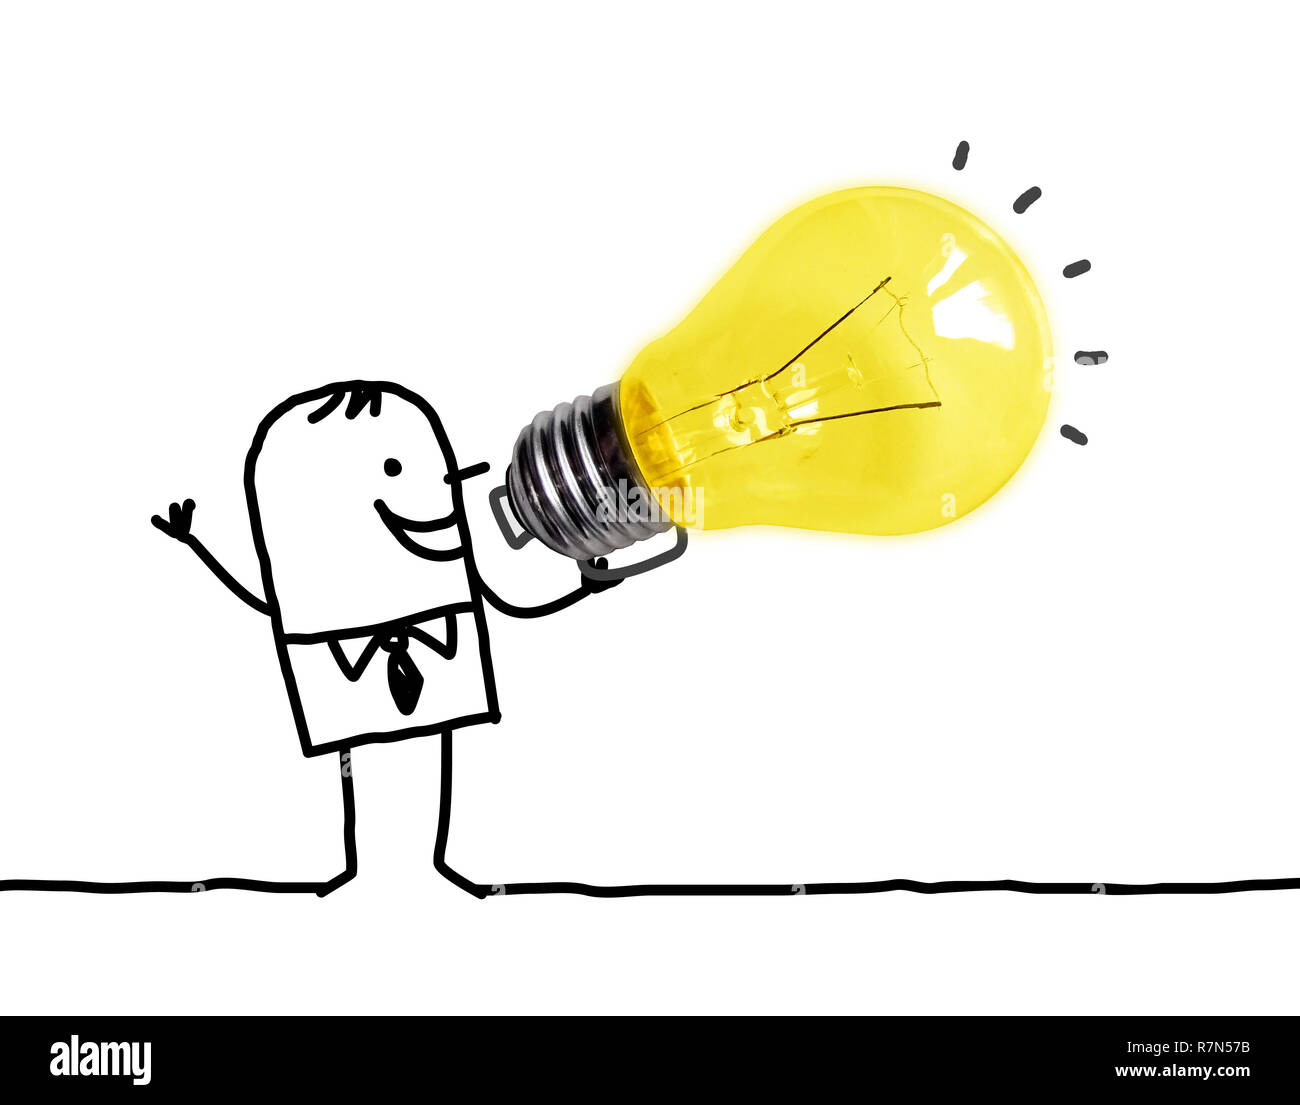 Hand drawn Cartoon man Using a Big light Bulb as a Loudhailer Stock Photo